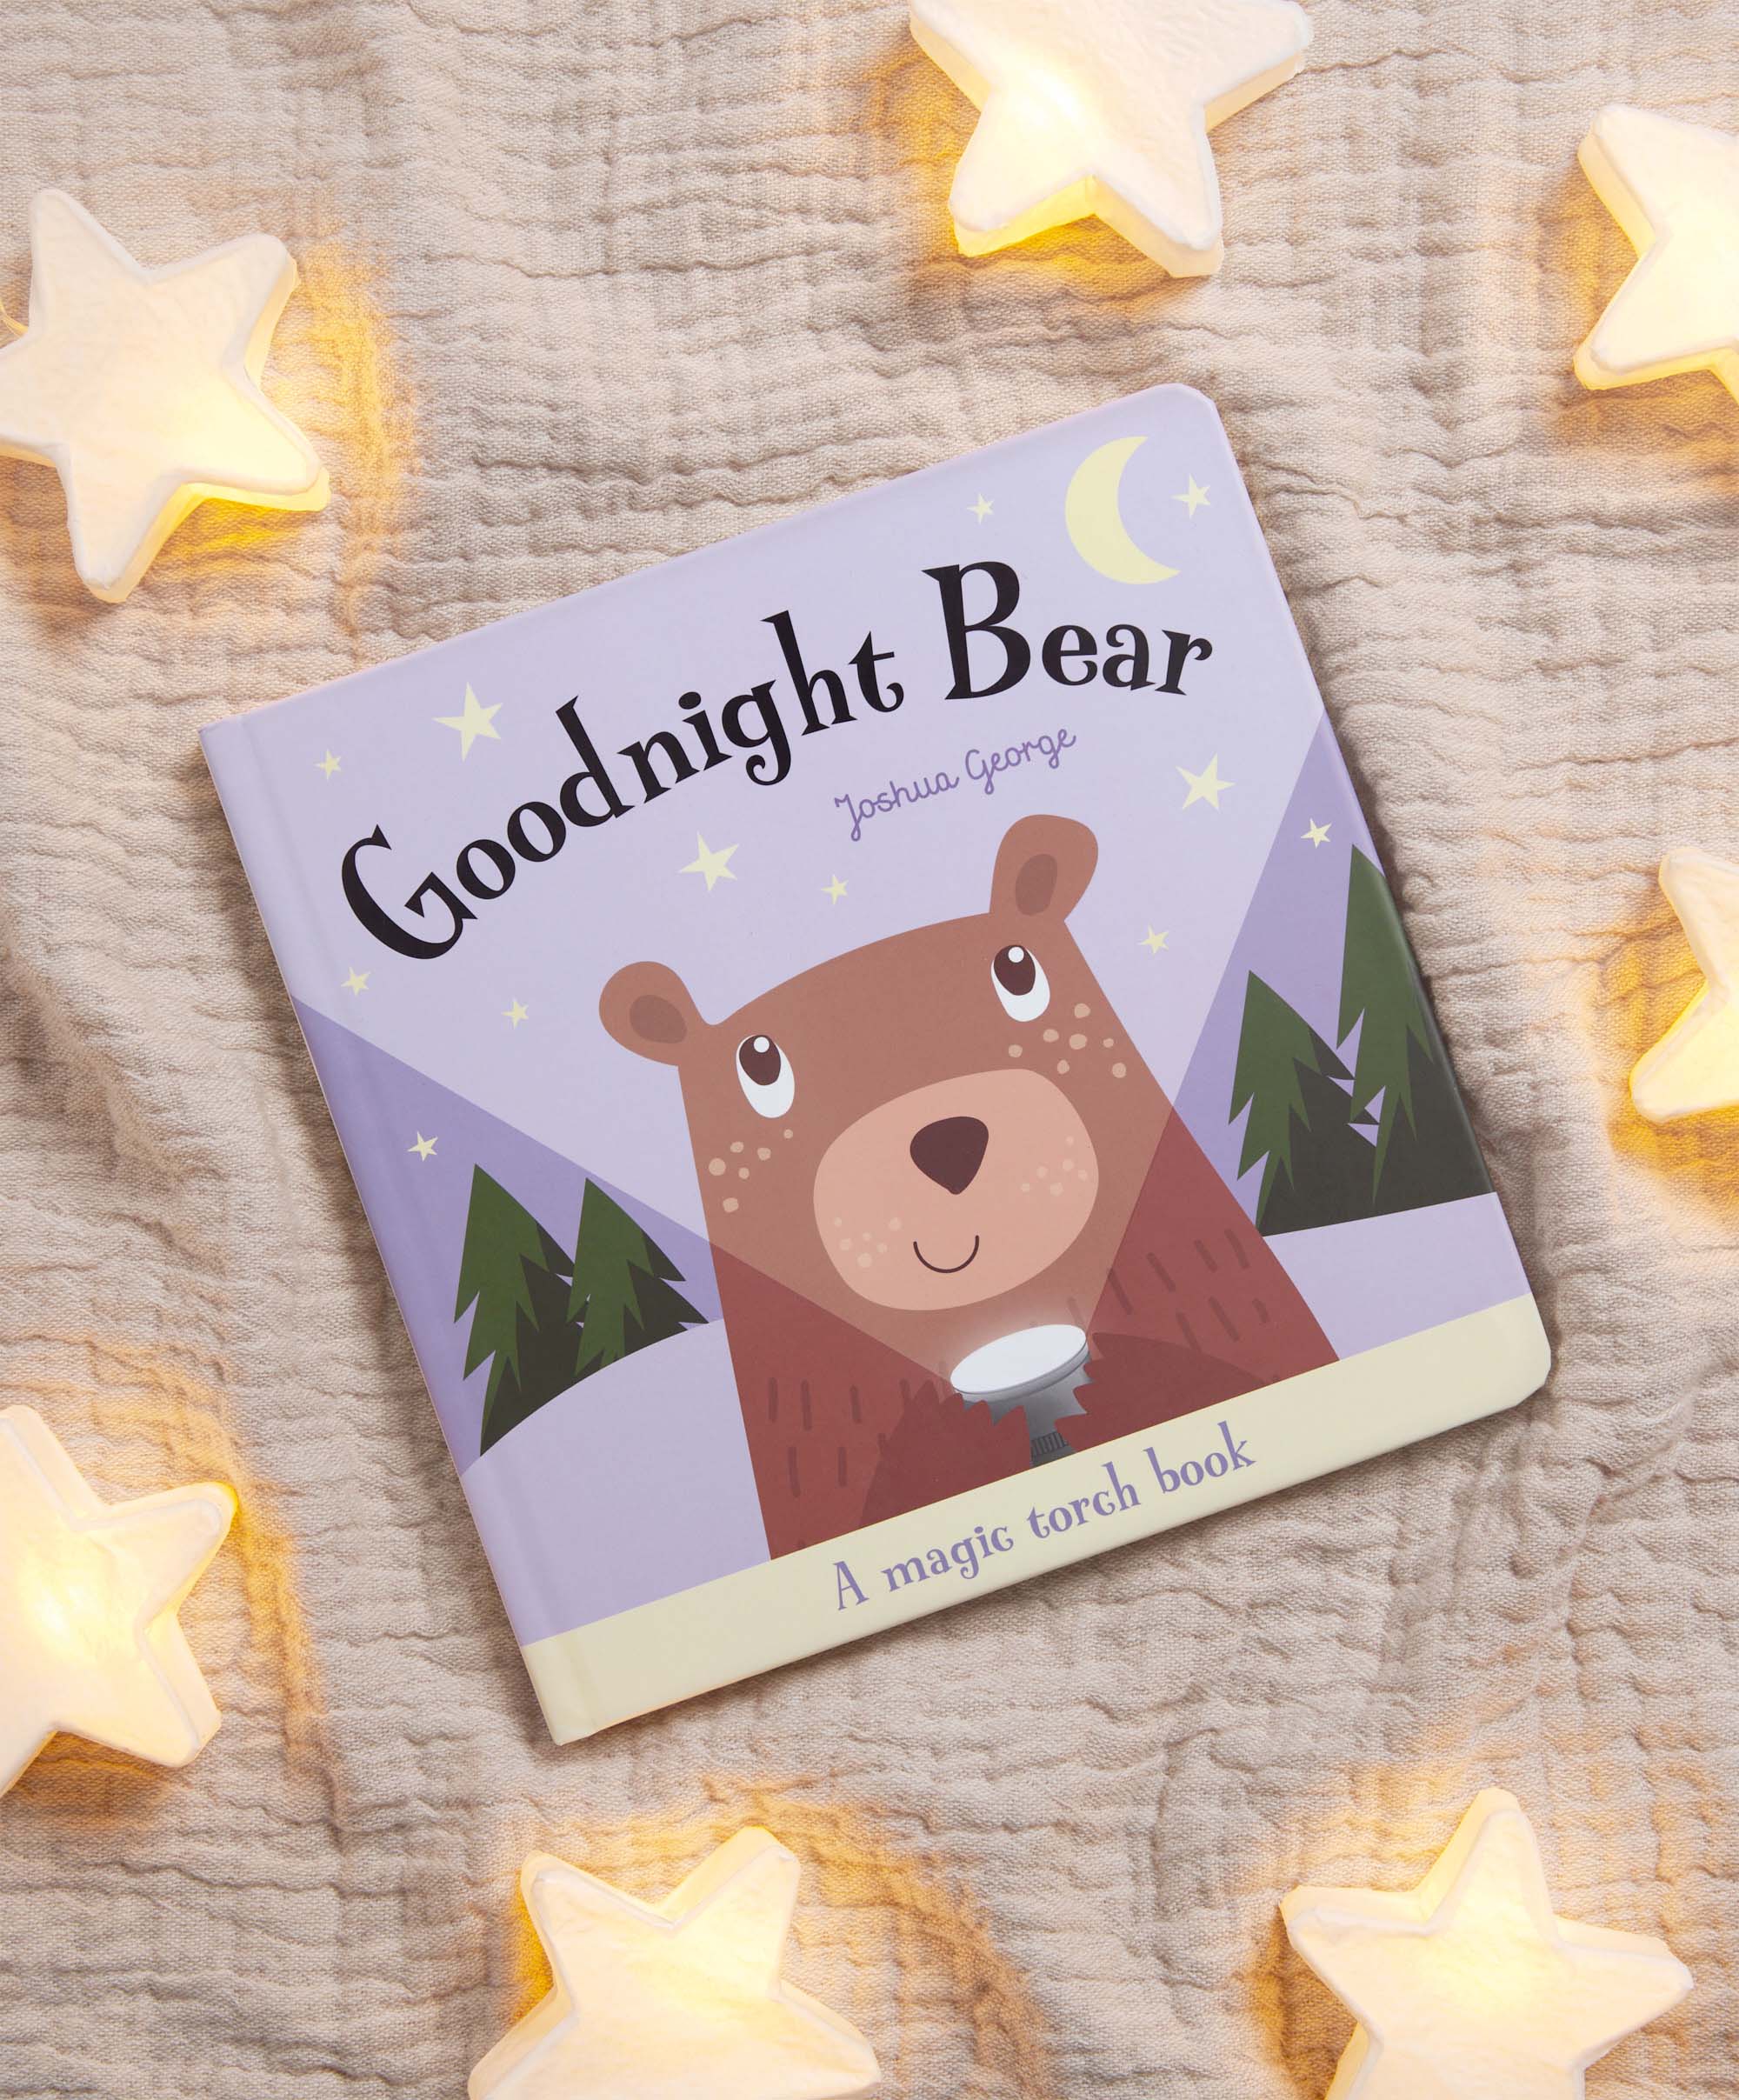 Goodnight Bear - A Magic Torch Book